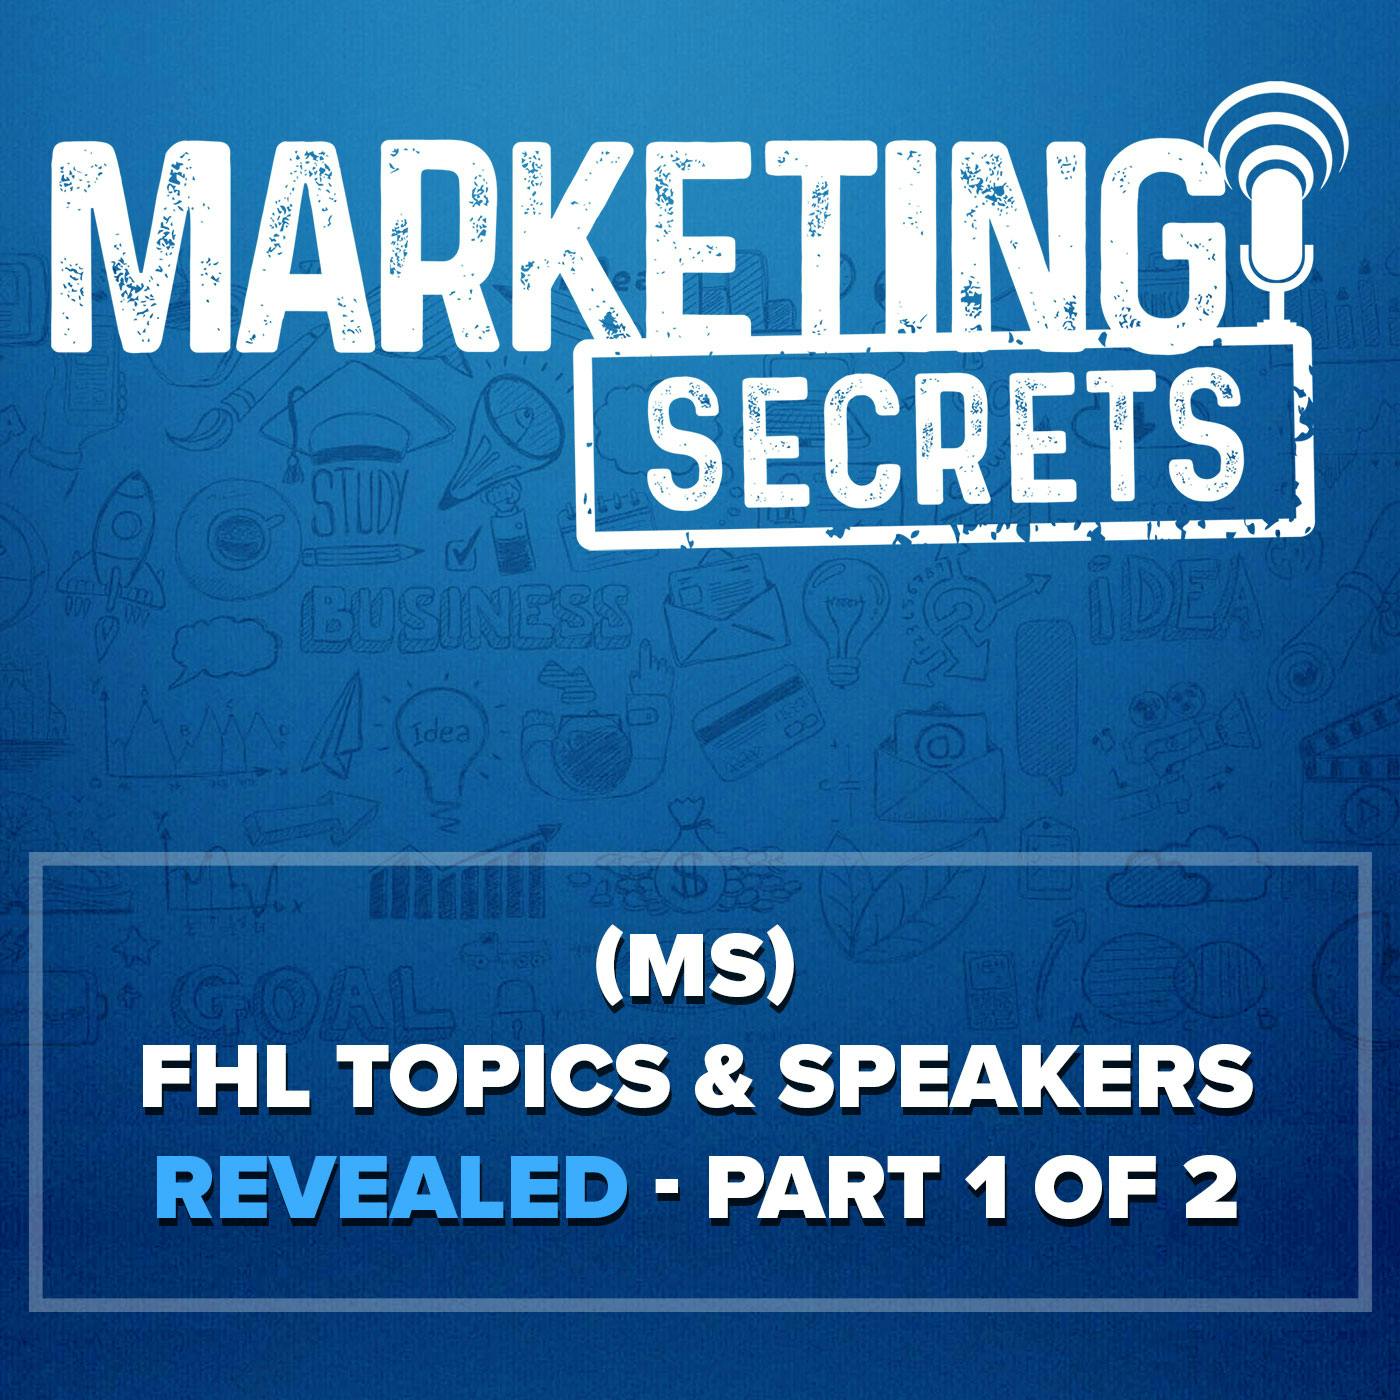 (MS) FHL Topics & Speakers REVEALED - Part 1 of 2